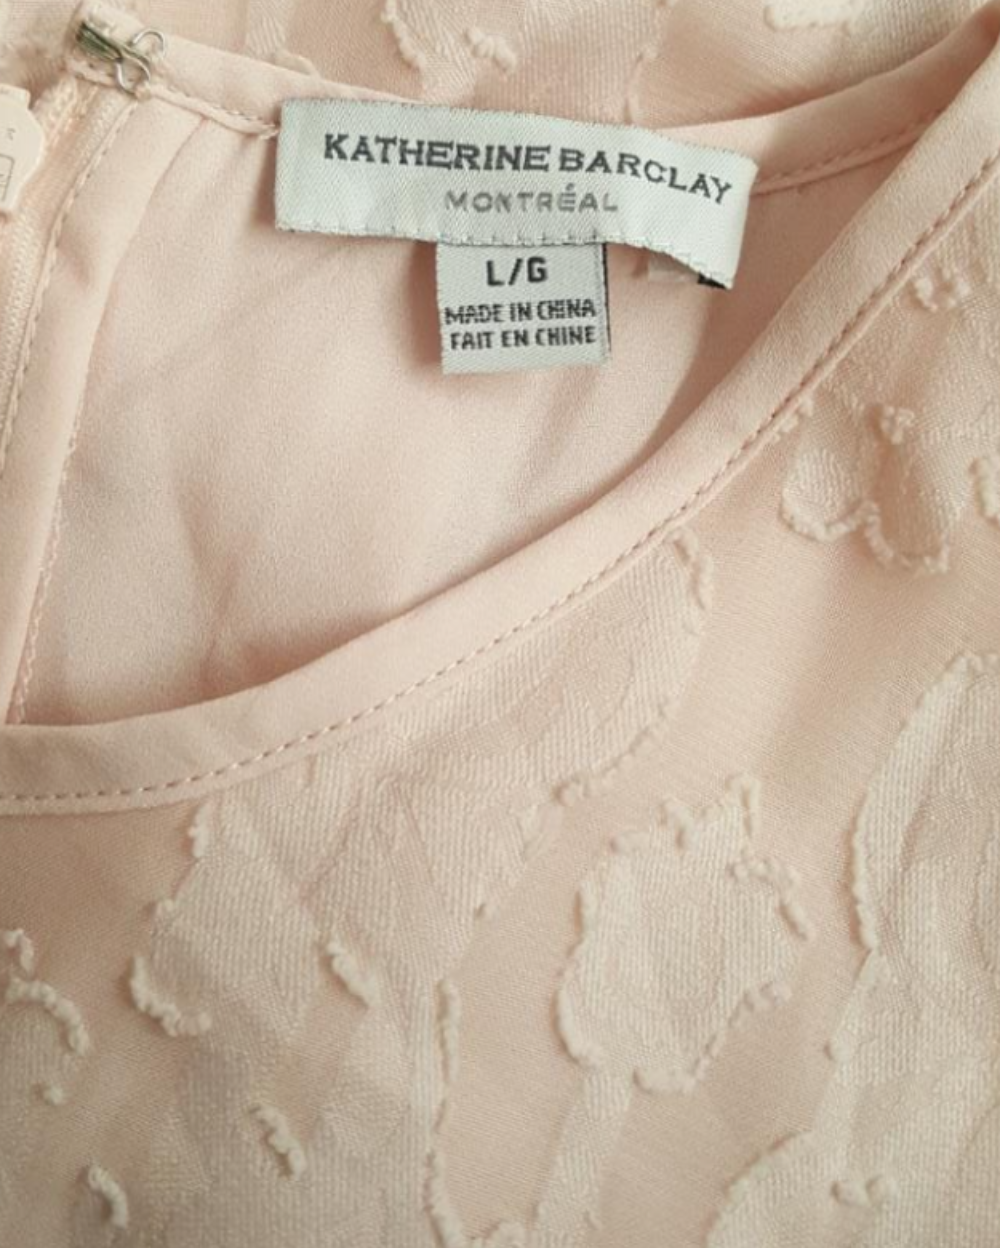 Blusas Casuales Katherine barclay